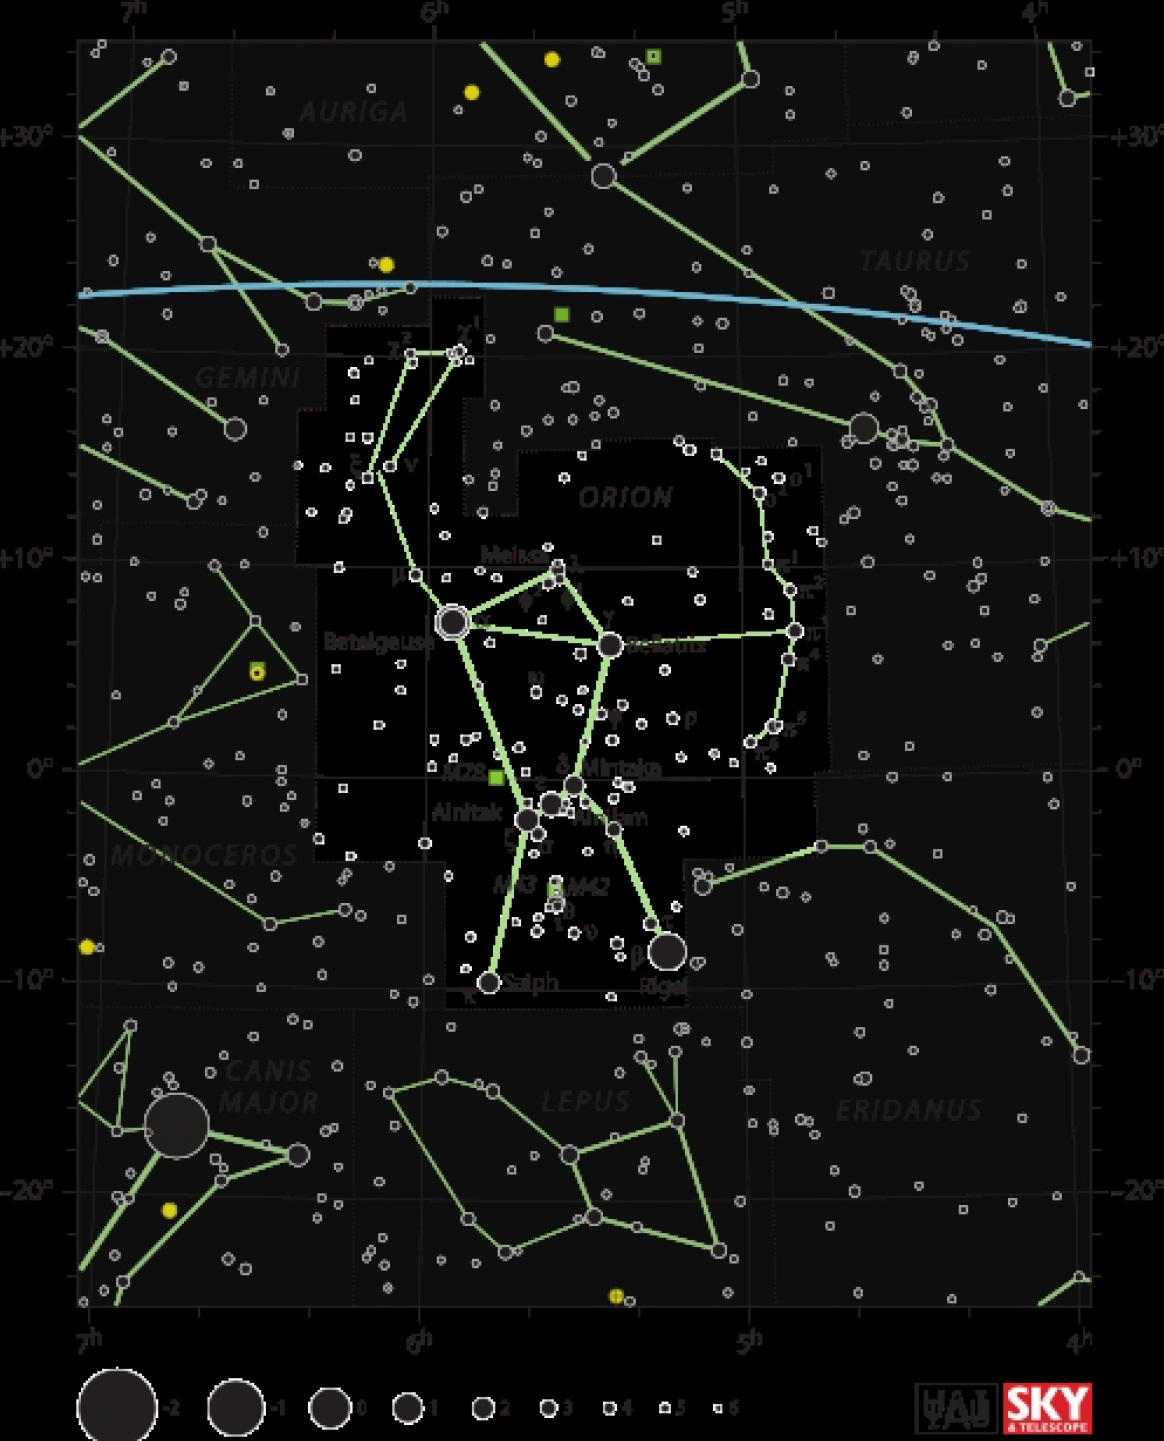 Созвездие орион на звездном небе. Звезды созвездия Ореон. Созвездие Ореон на карте звездного неба. Пояс Ориона Созвездие схема. Созвездие Орион схема пояс Ориона.